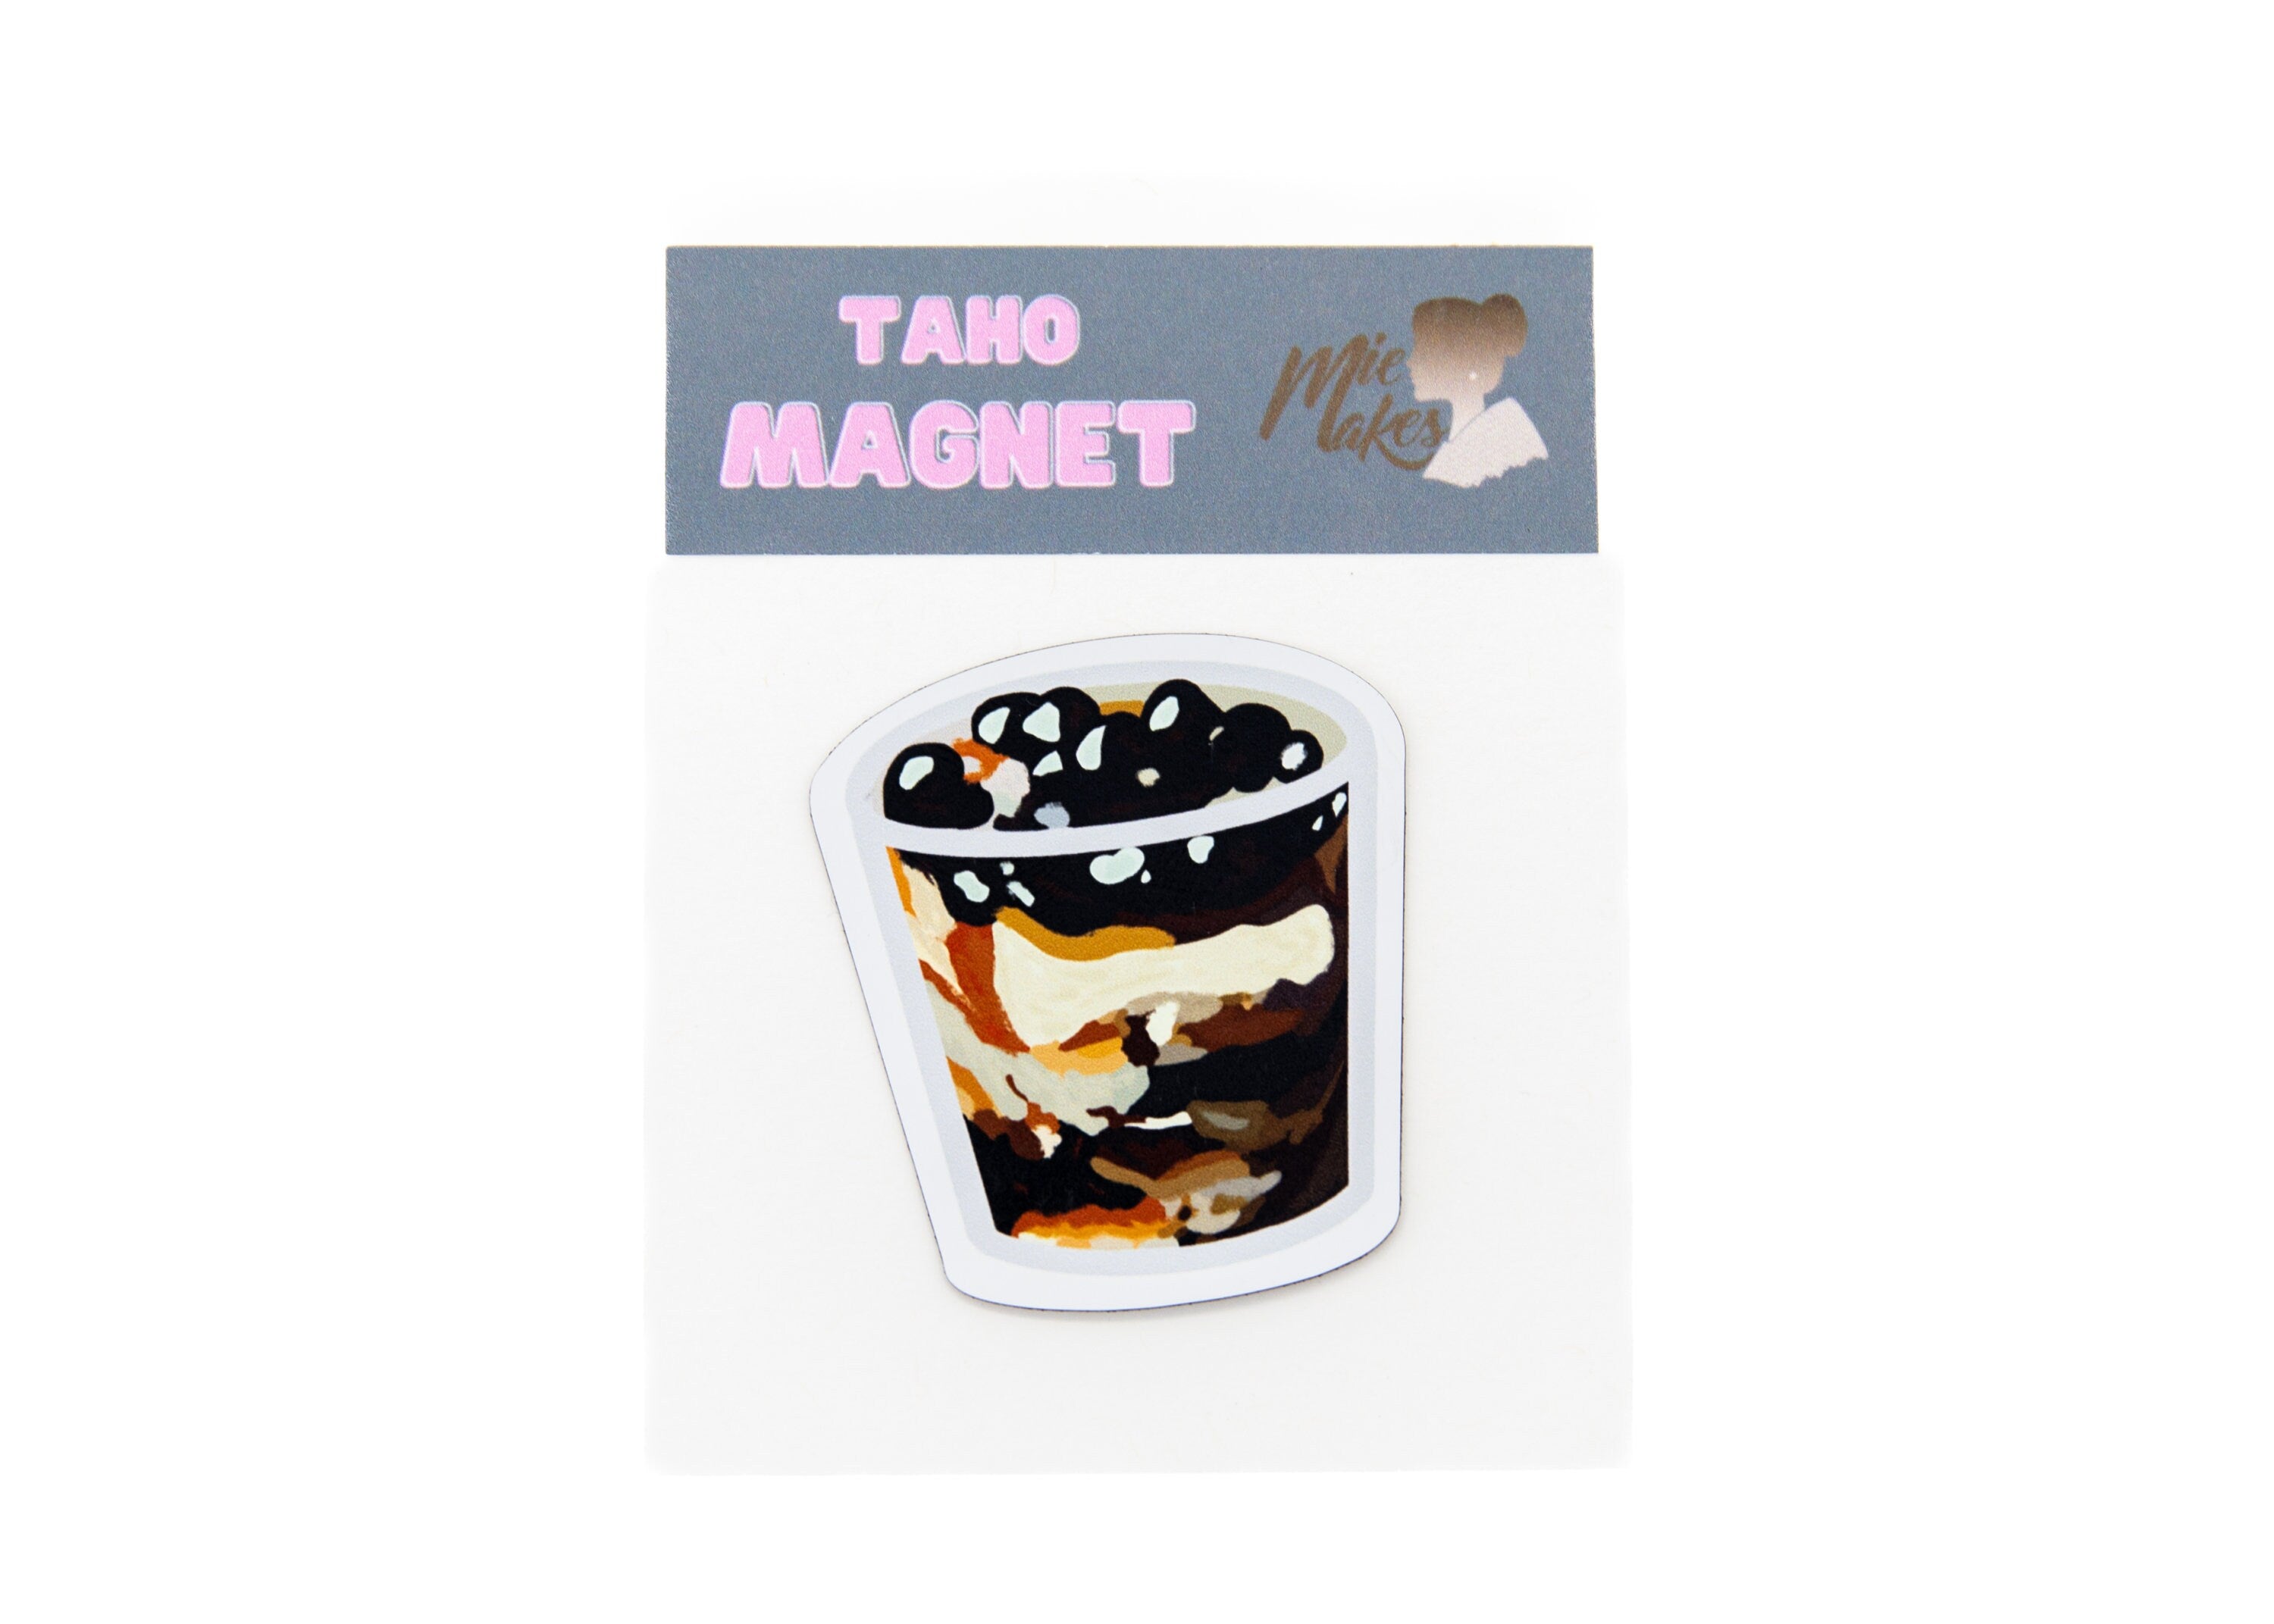 Mie Makes Taho Magnet, Filipino Taho, Dessert, Filipino, Philippines, Filipino Food, Sweets, Dessert, Filipino Snack